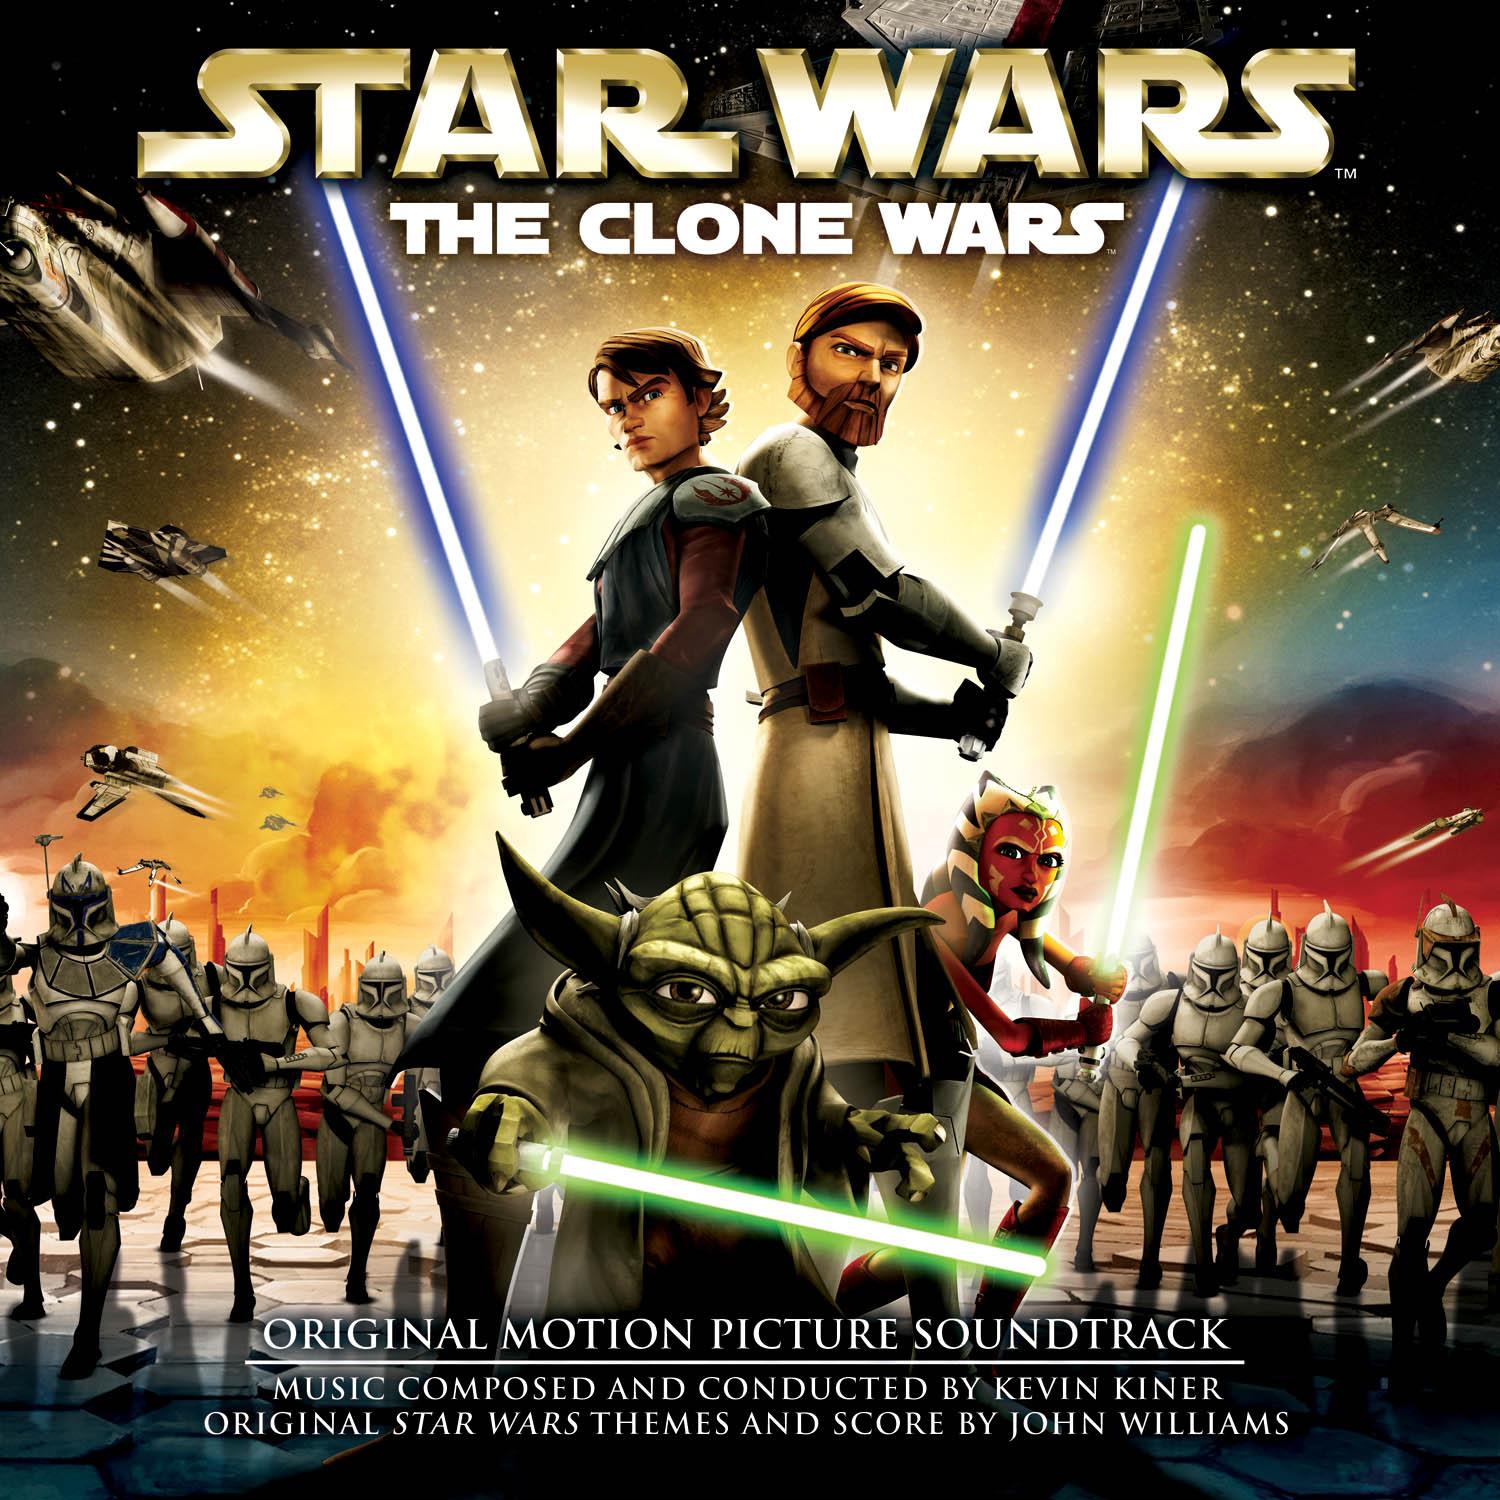 Star Wars: The Clone Wars #21